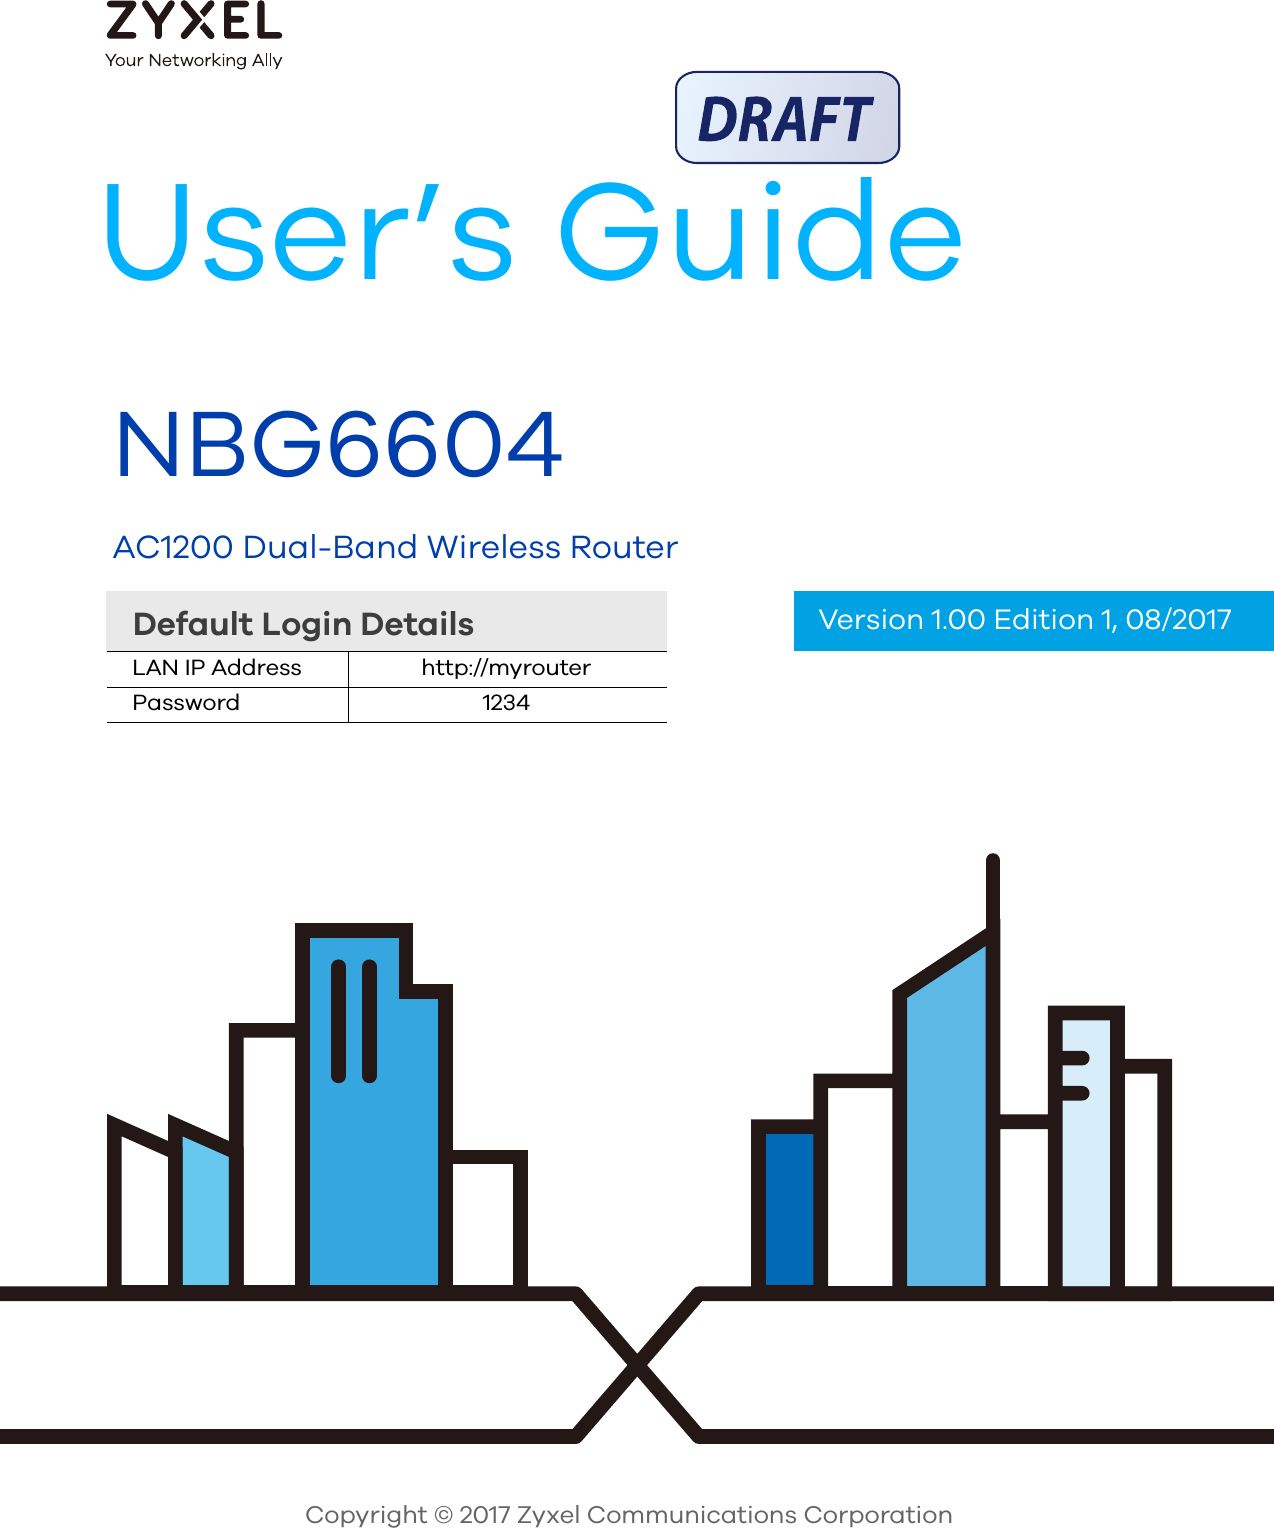  Default Login DetailsUser’s GuideNBG6604AC1200 Dual-Band Wireless RouterCopyright © 2017 Zyxel Communications CorporationLAN IP Address http://myrouterPassword 1234Version 1.00 Edition 1, 08/2017